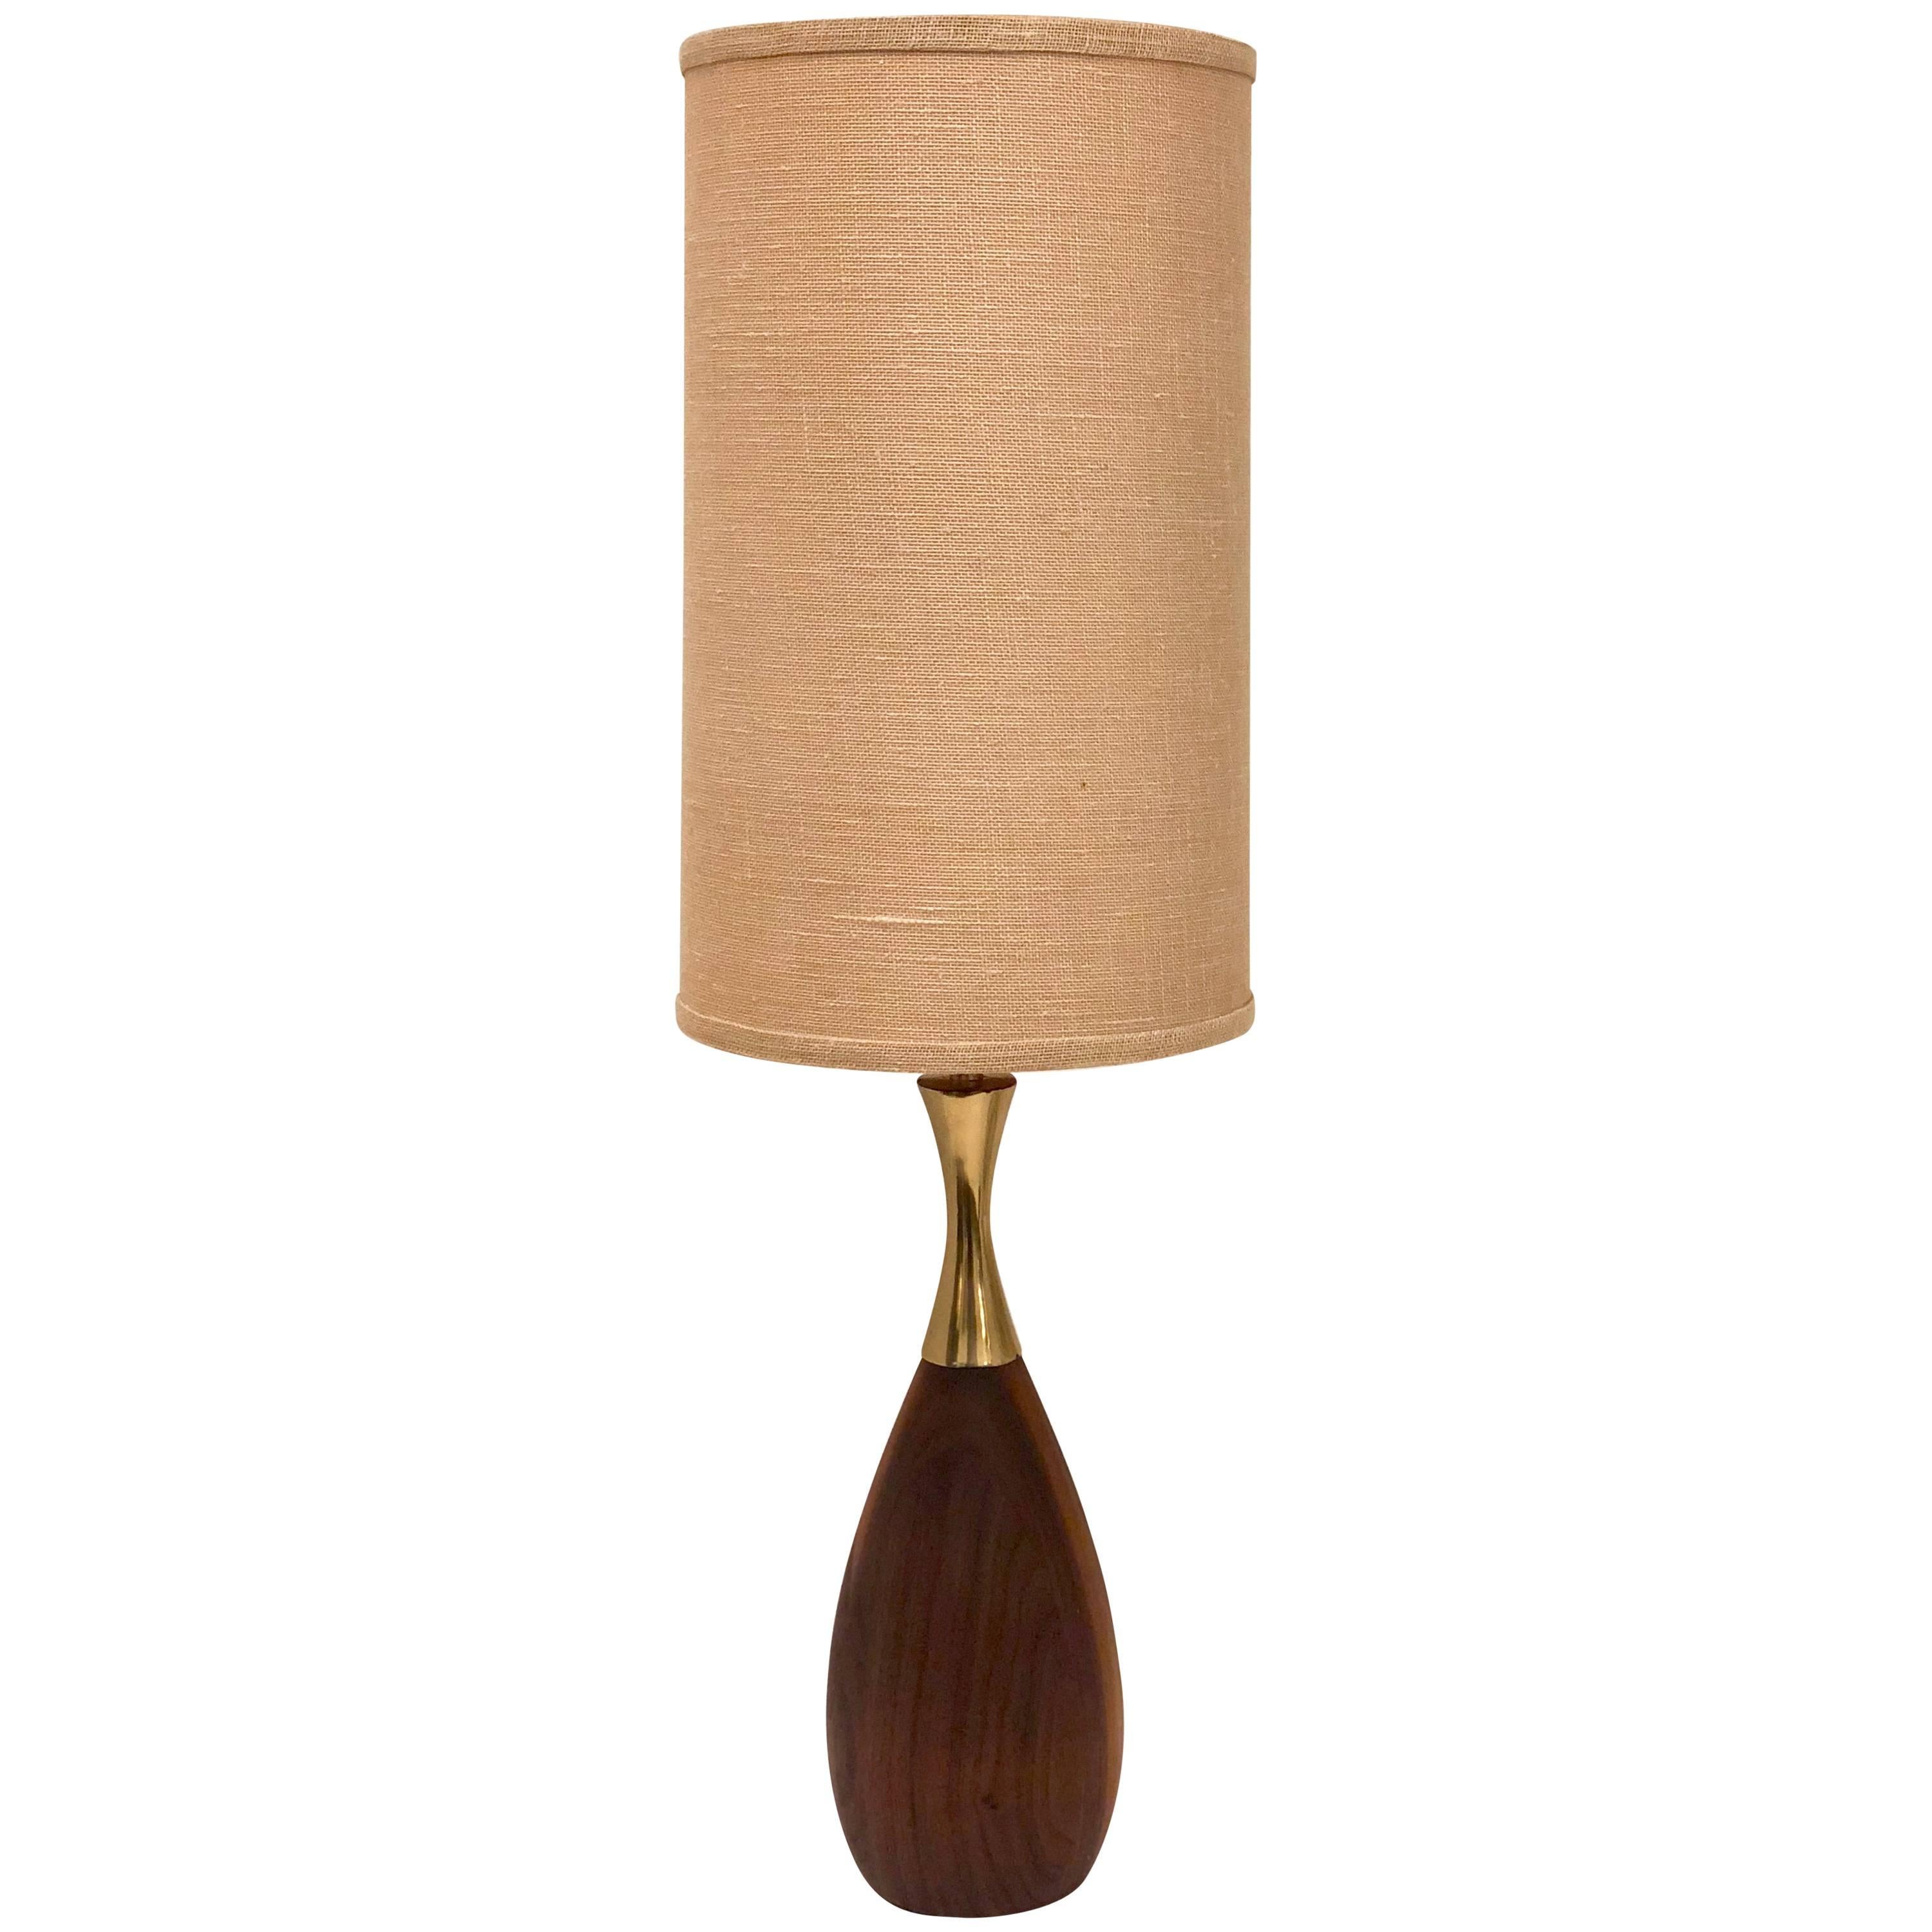 American Mid-Century Modern Walnut and Brass Lamp by Laurel